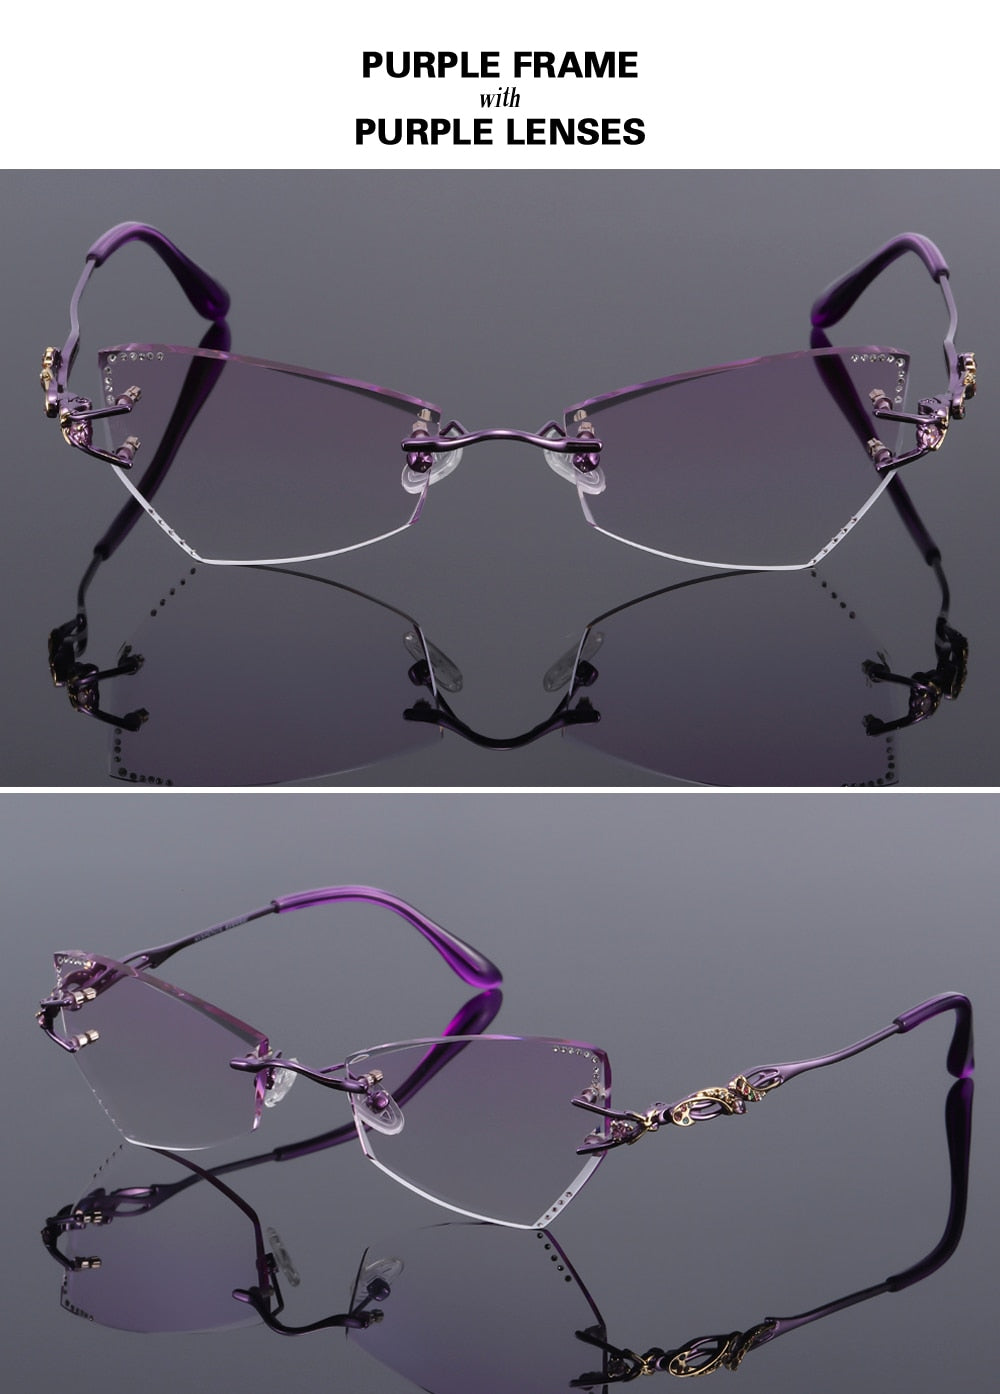 Chashma Women's Rimless Eyeglasses Tint Lenses Titanium Diamond Cut Cat Eye 8036Ce Rimless Chashma   